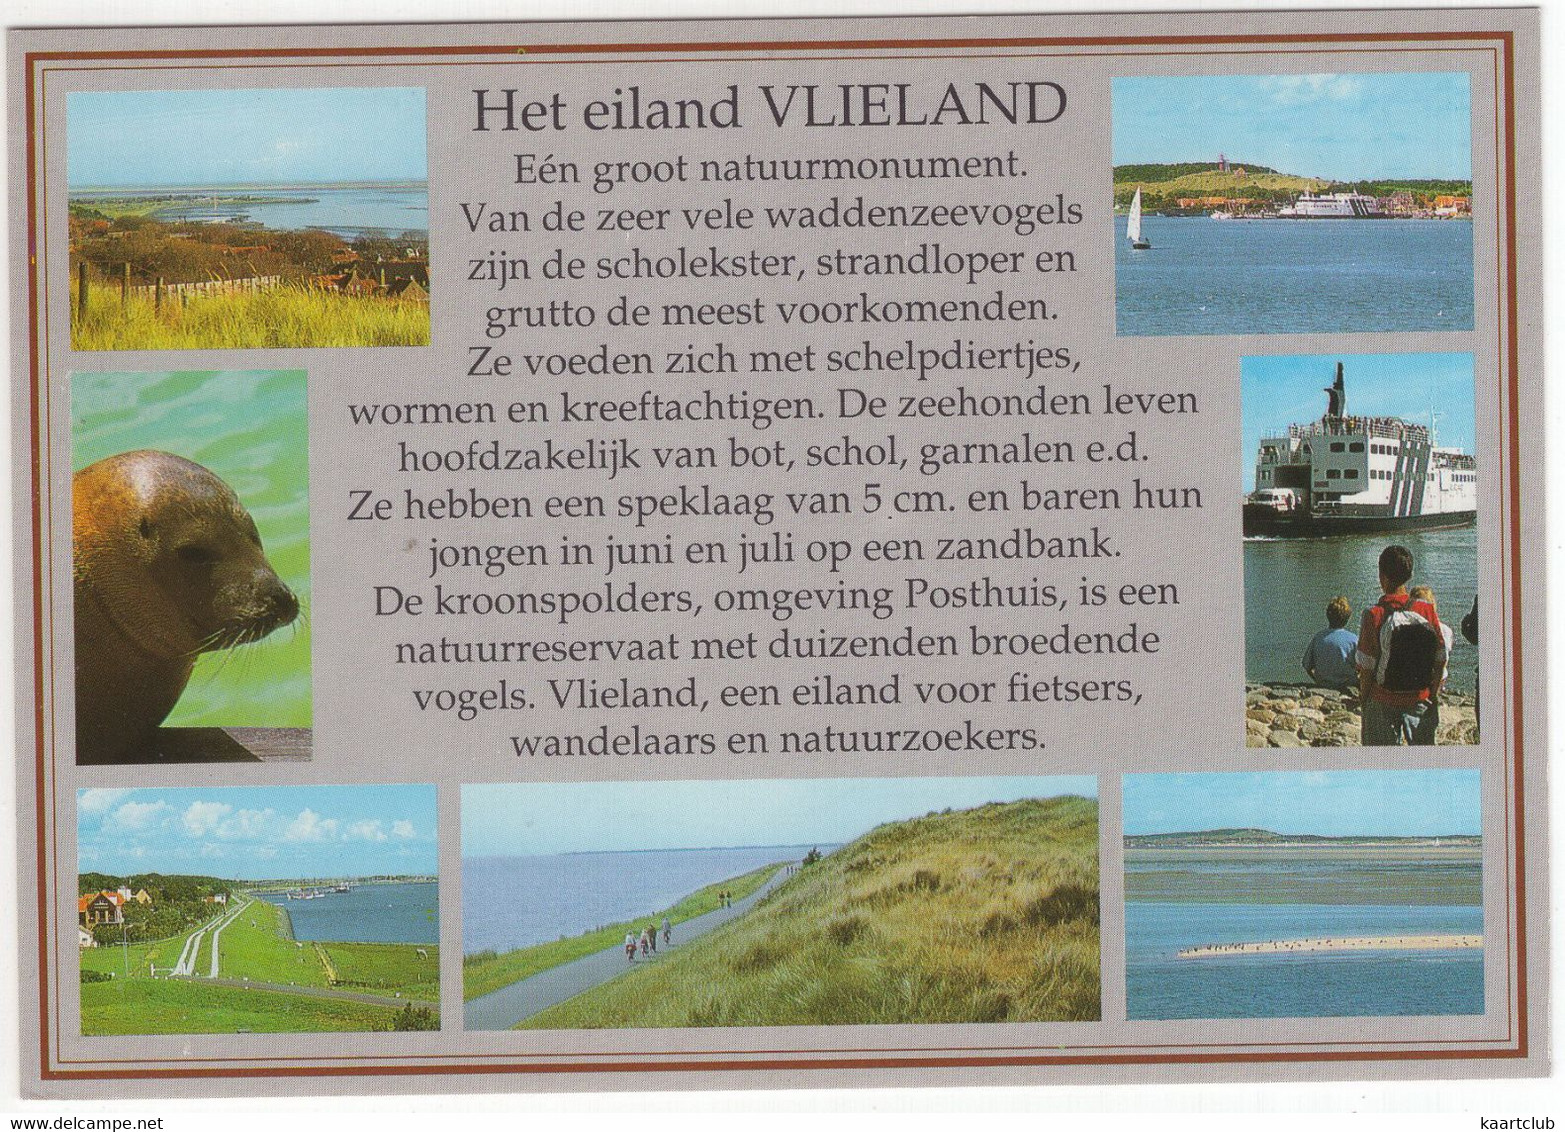 Het Eiland Vlieland - (Wadden, Nederland/Holland) - VLD 72 - Vlieland